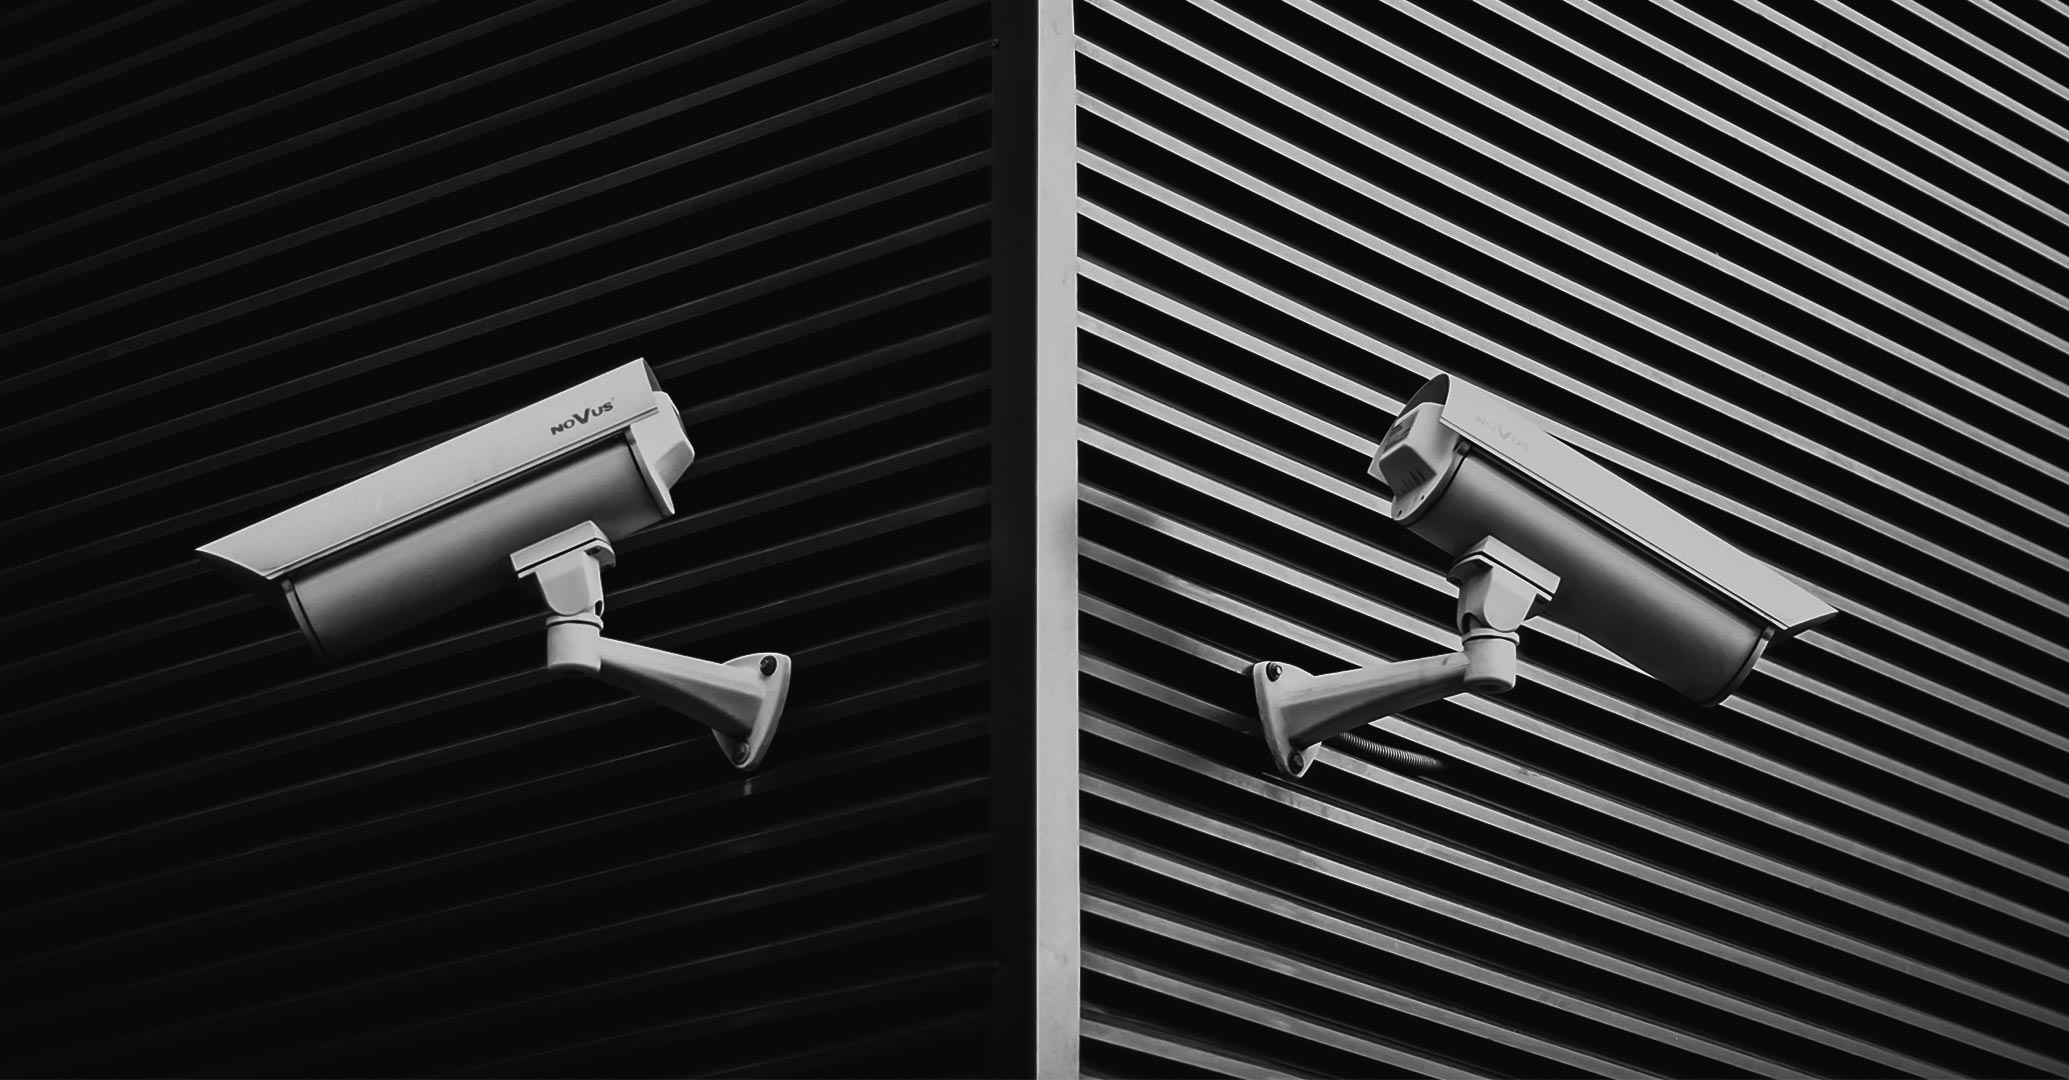 Security cameras on building